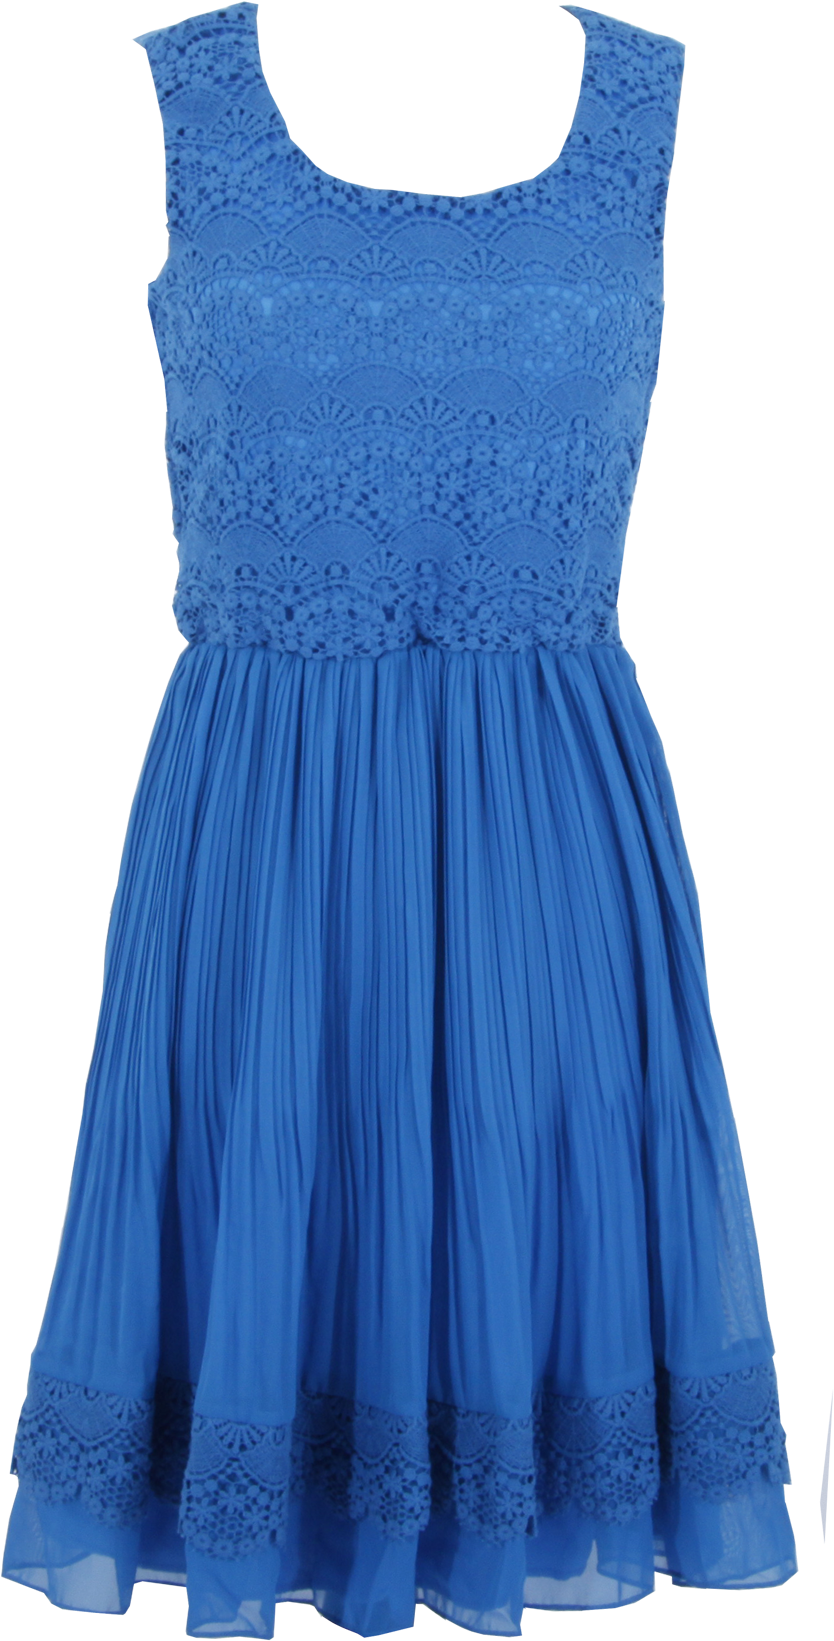 Blue Lace Skater Dress PNG